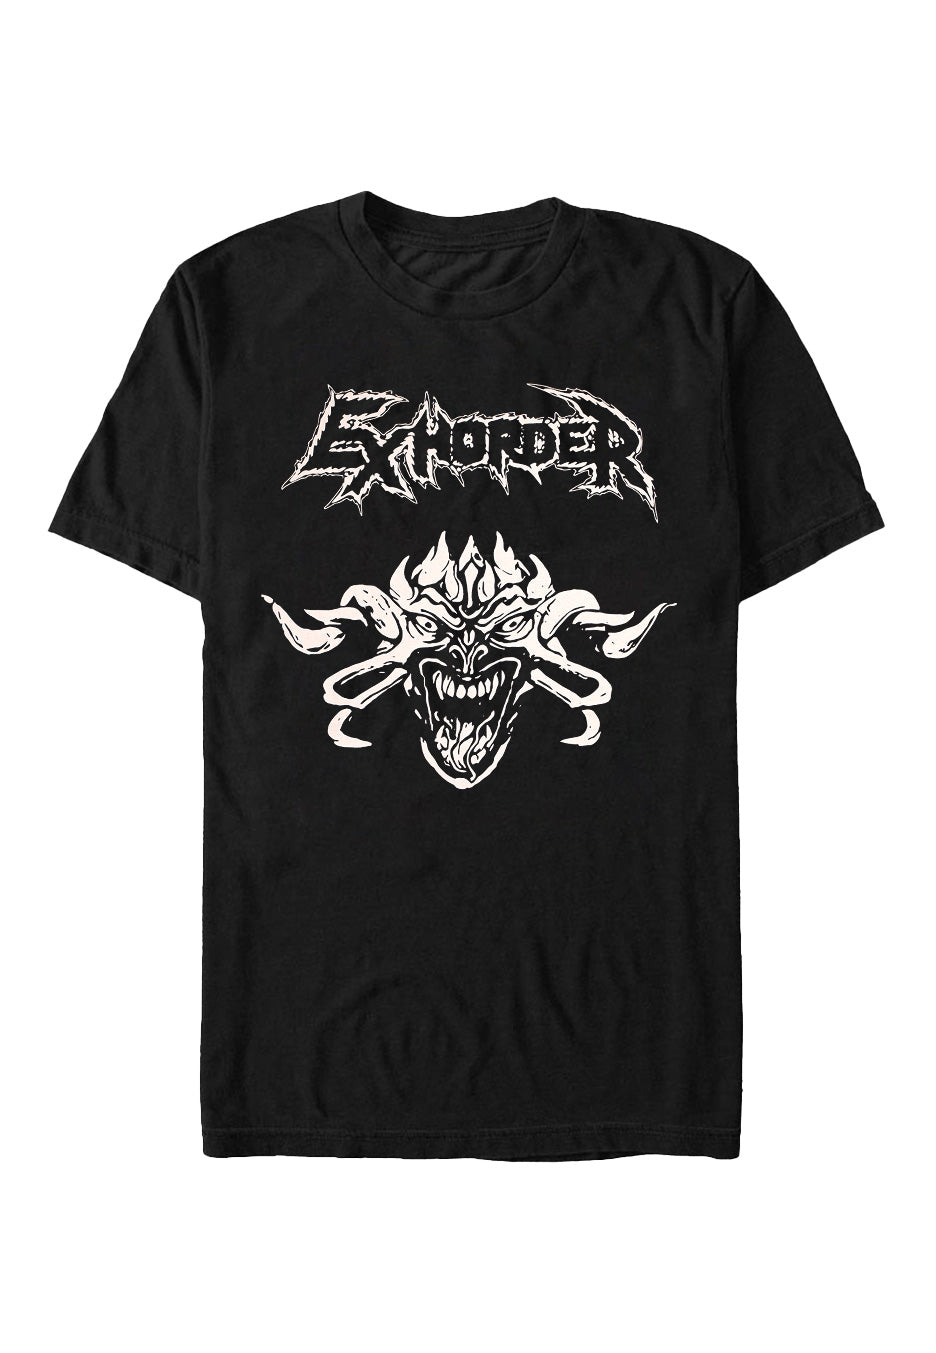 Exhorder - Demons - T-Shirt